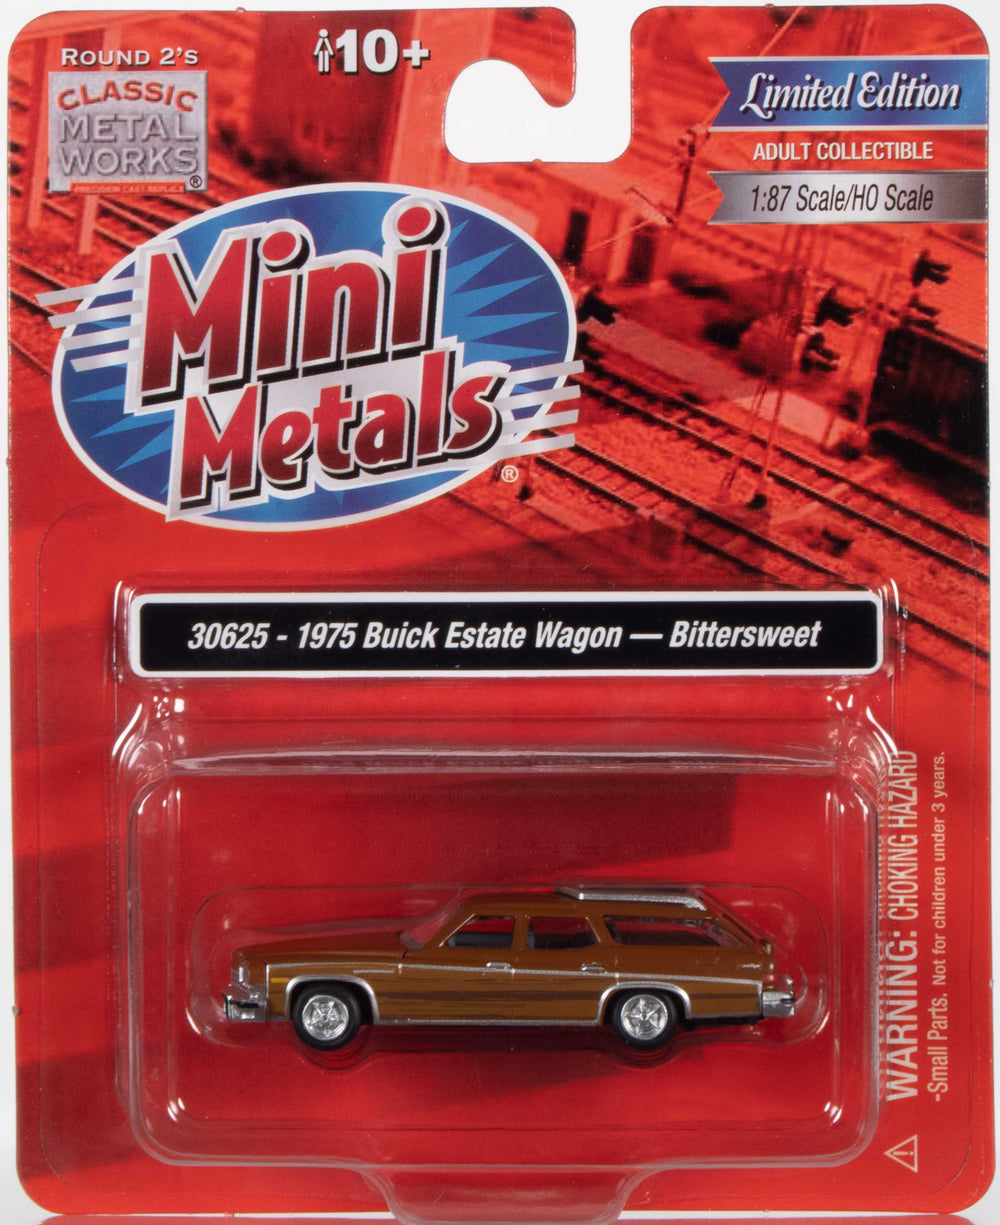 Classic Metal Works 1975 Buick Estate Wagon (Bittersweet) 1:87 HO Scale